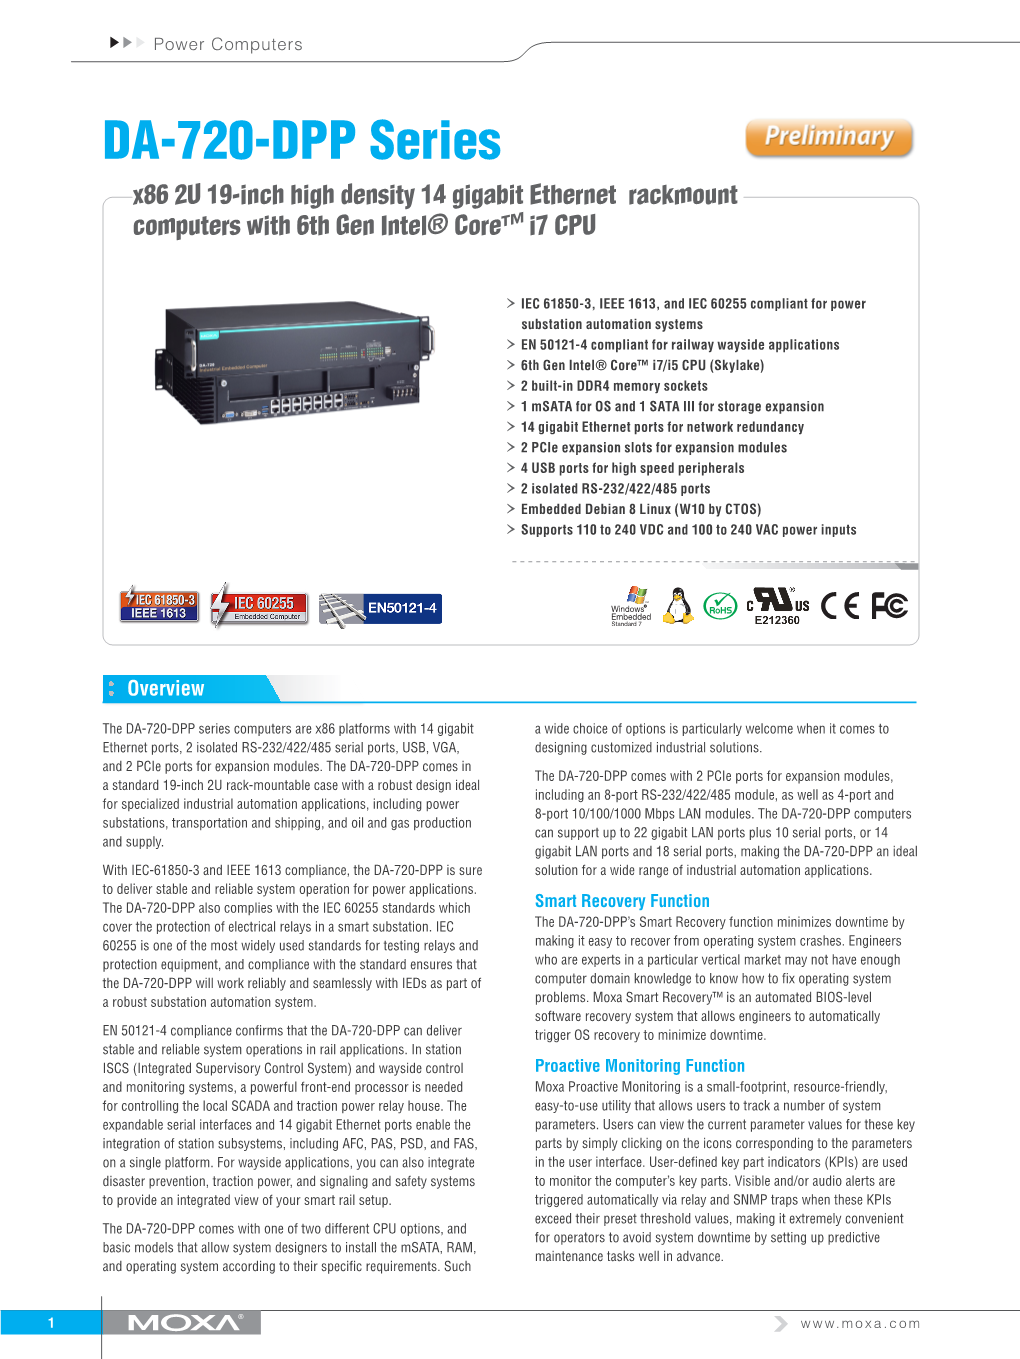 DA-720-DPP Series X86 2U 19-Inch High Density 14 Gigabit Ethernet Rackmount Computers with 6Th Gen Intel® Core™ I7 CPU